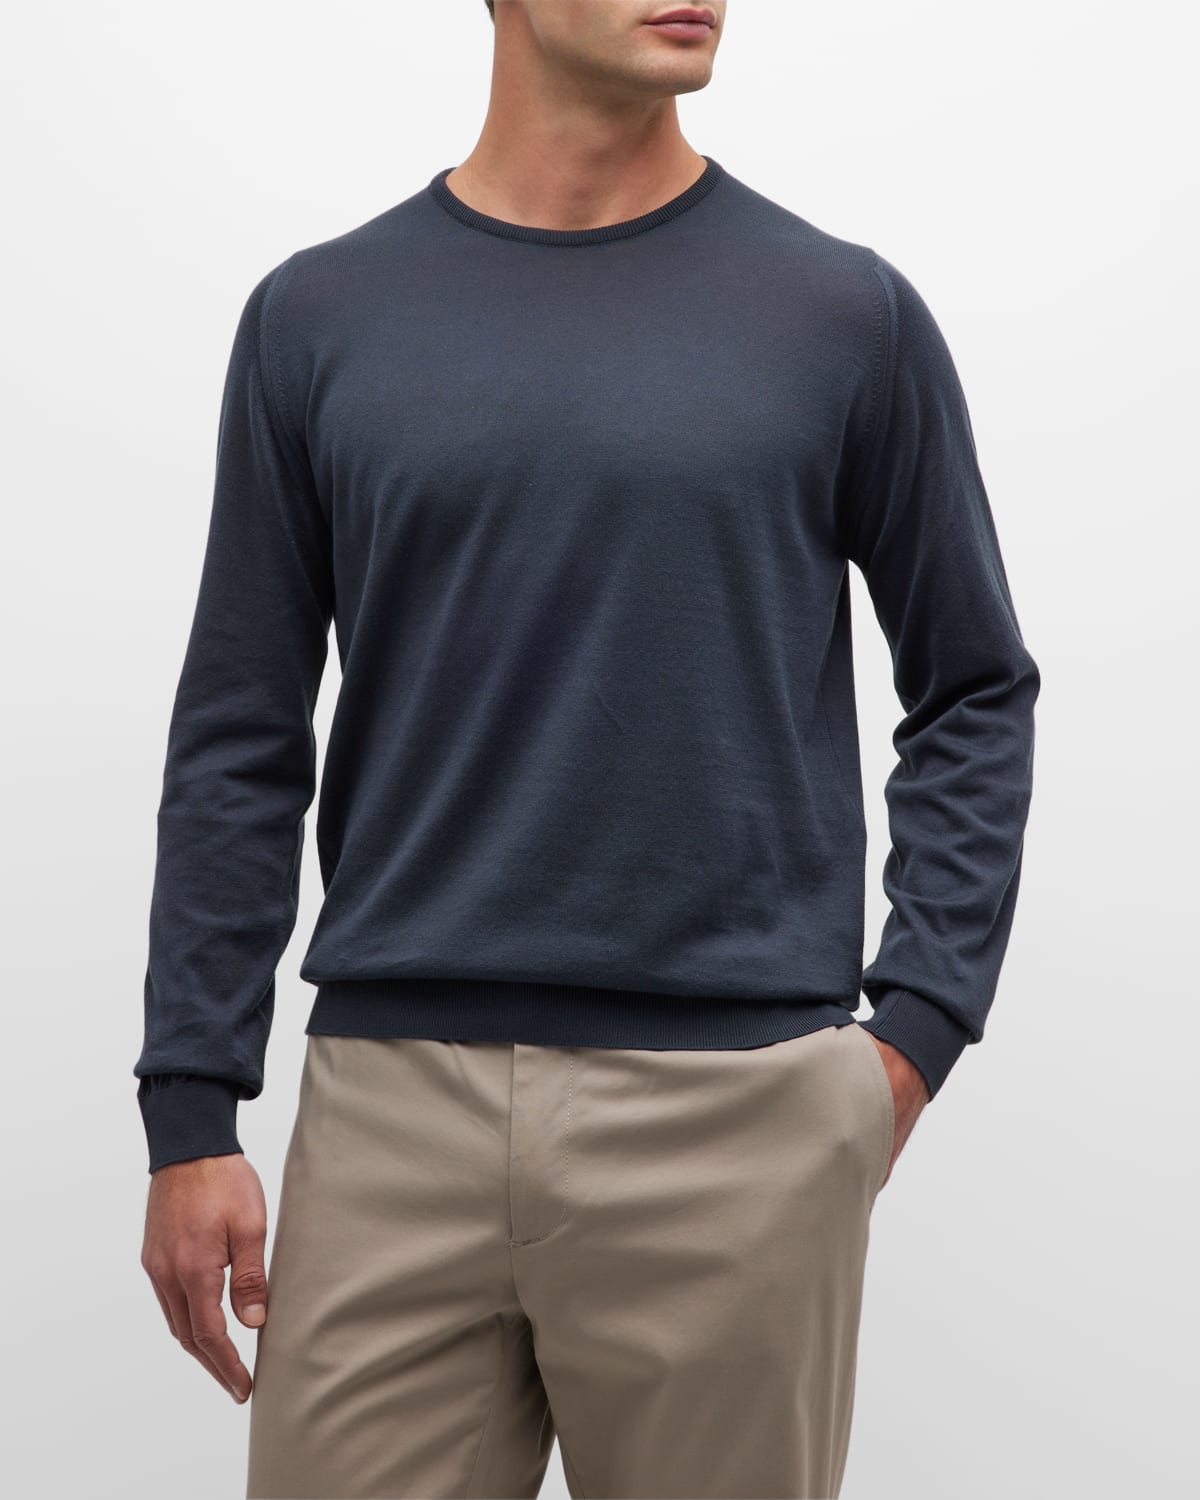 Men's Hatfield Sea Island Cotton Sweater